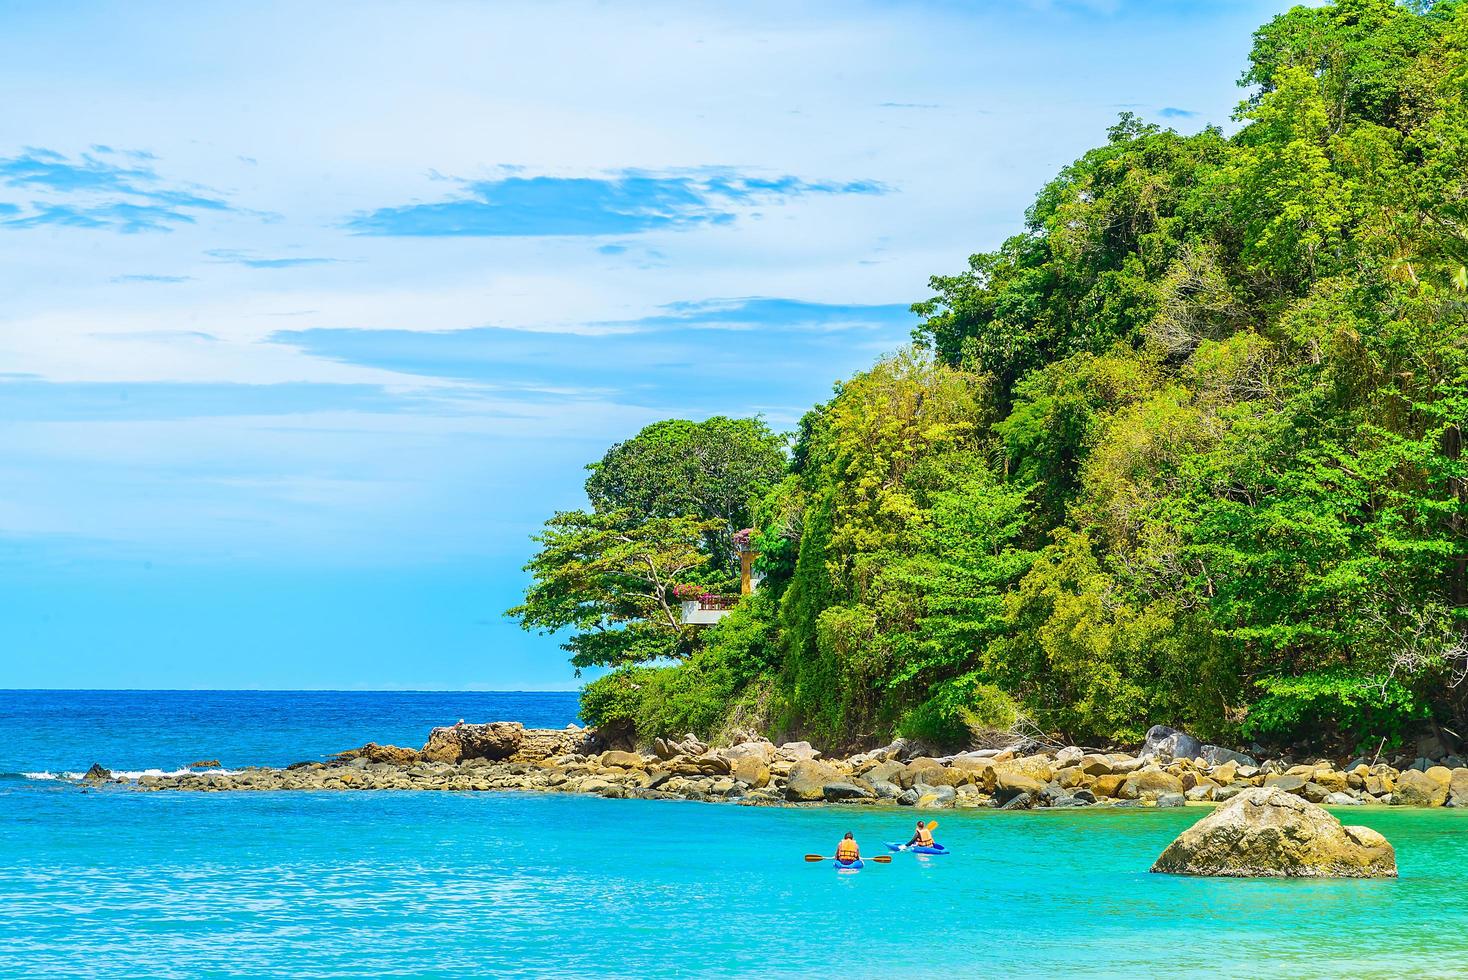 Beautiful tropical beach background photo